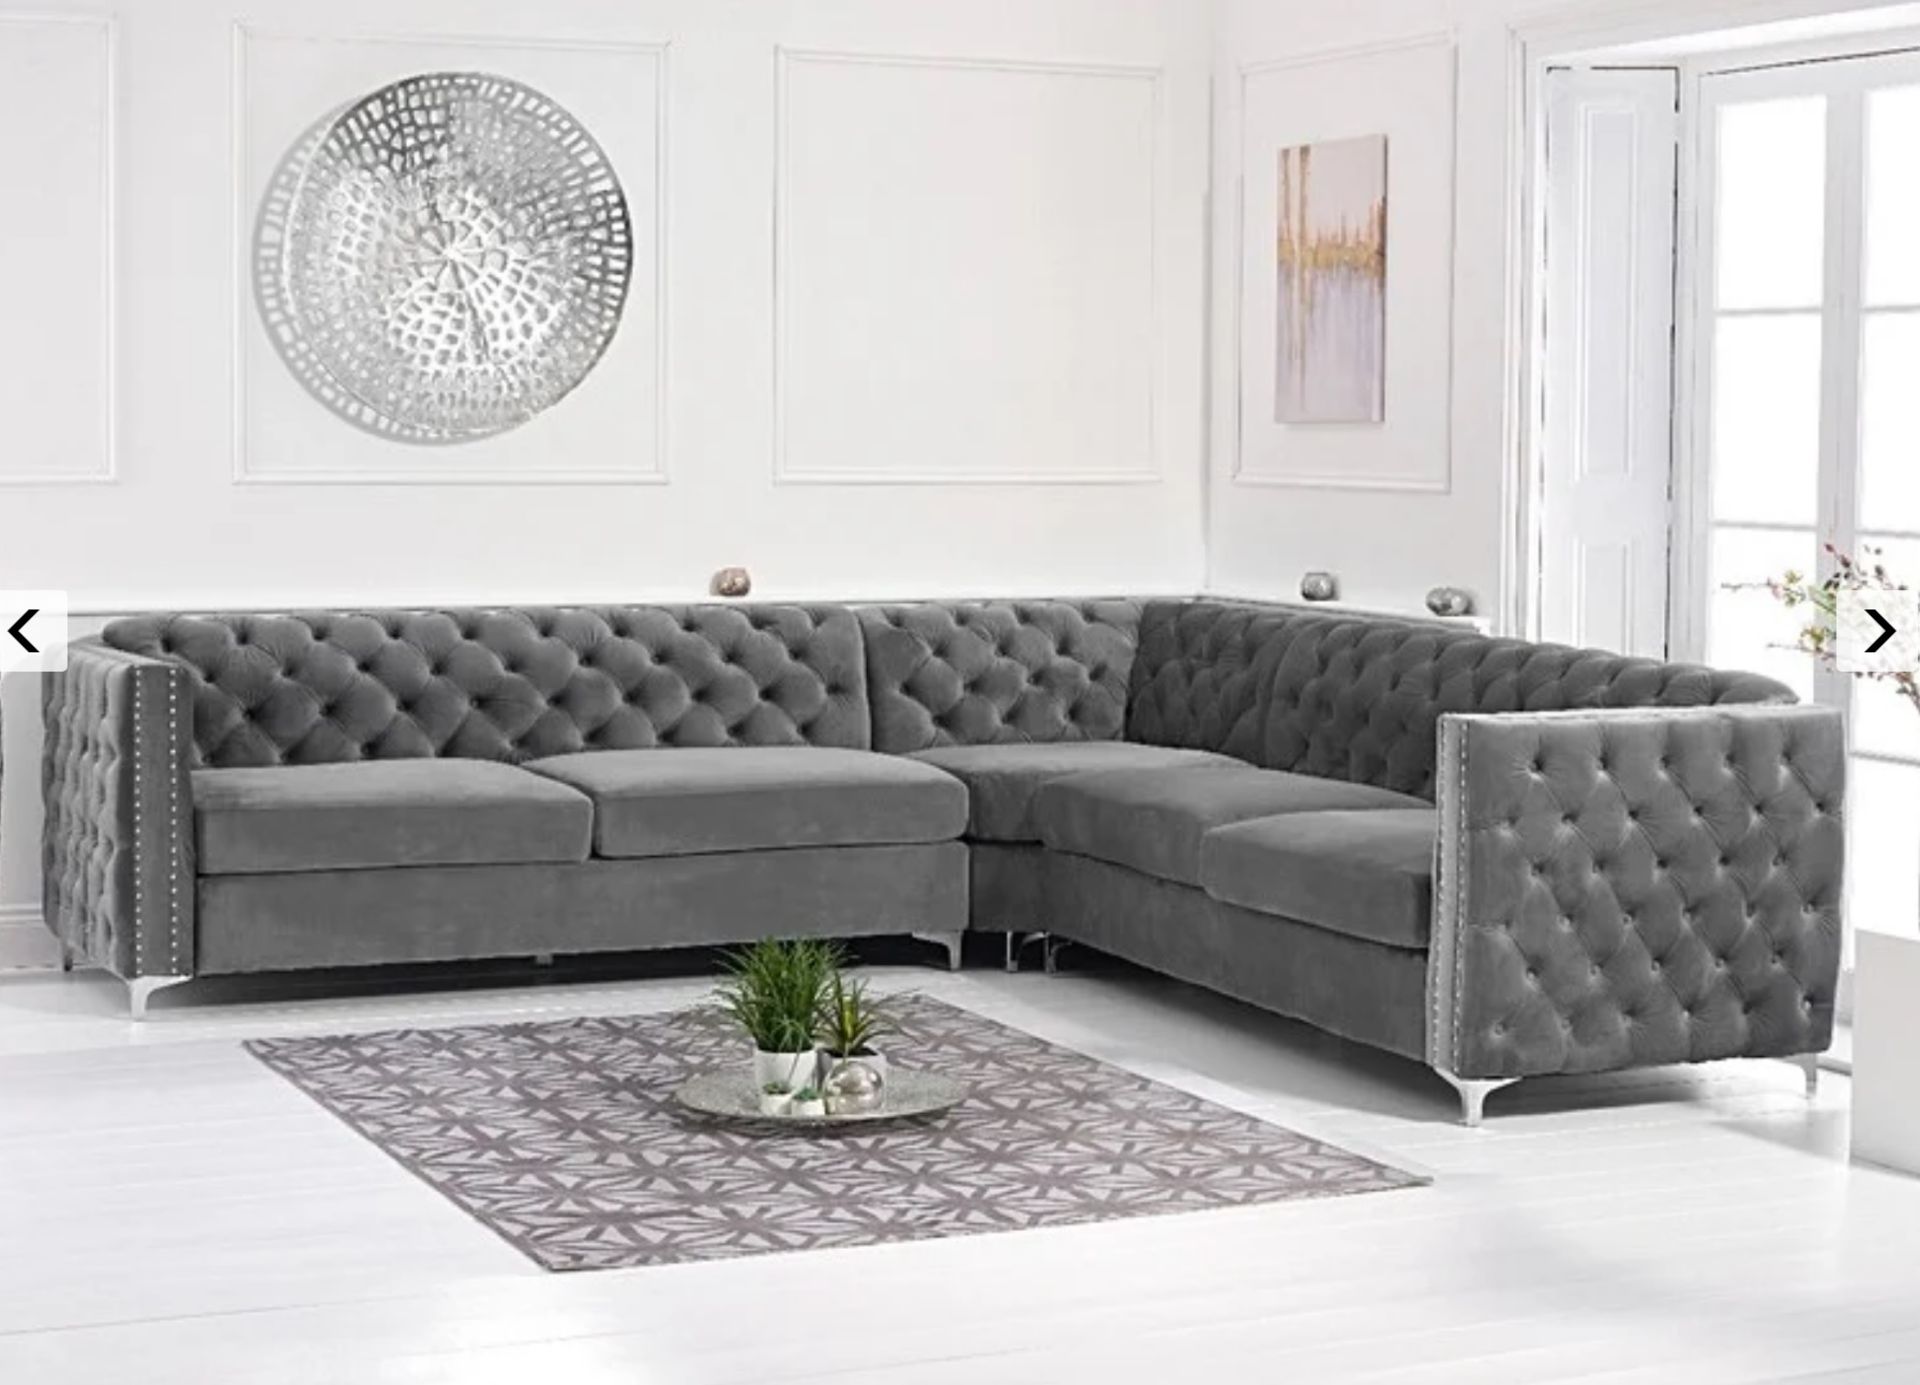 Mistral Grey Velvet Corner Sofa Offering Chesterfield-Inspired Looks And Luxurious Comfort, The